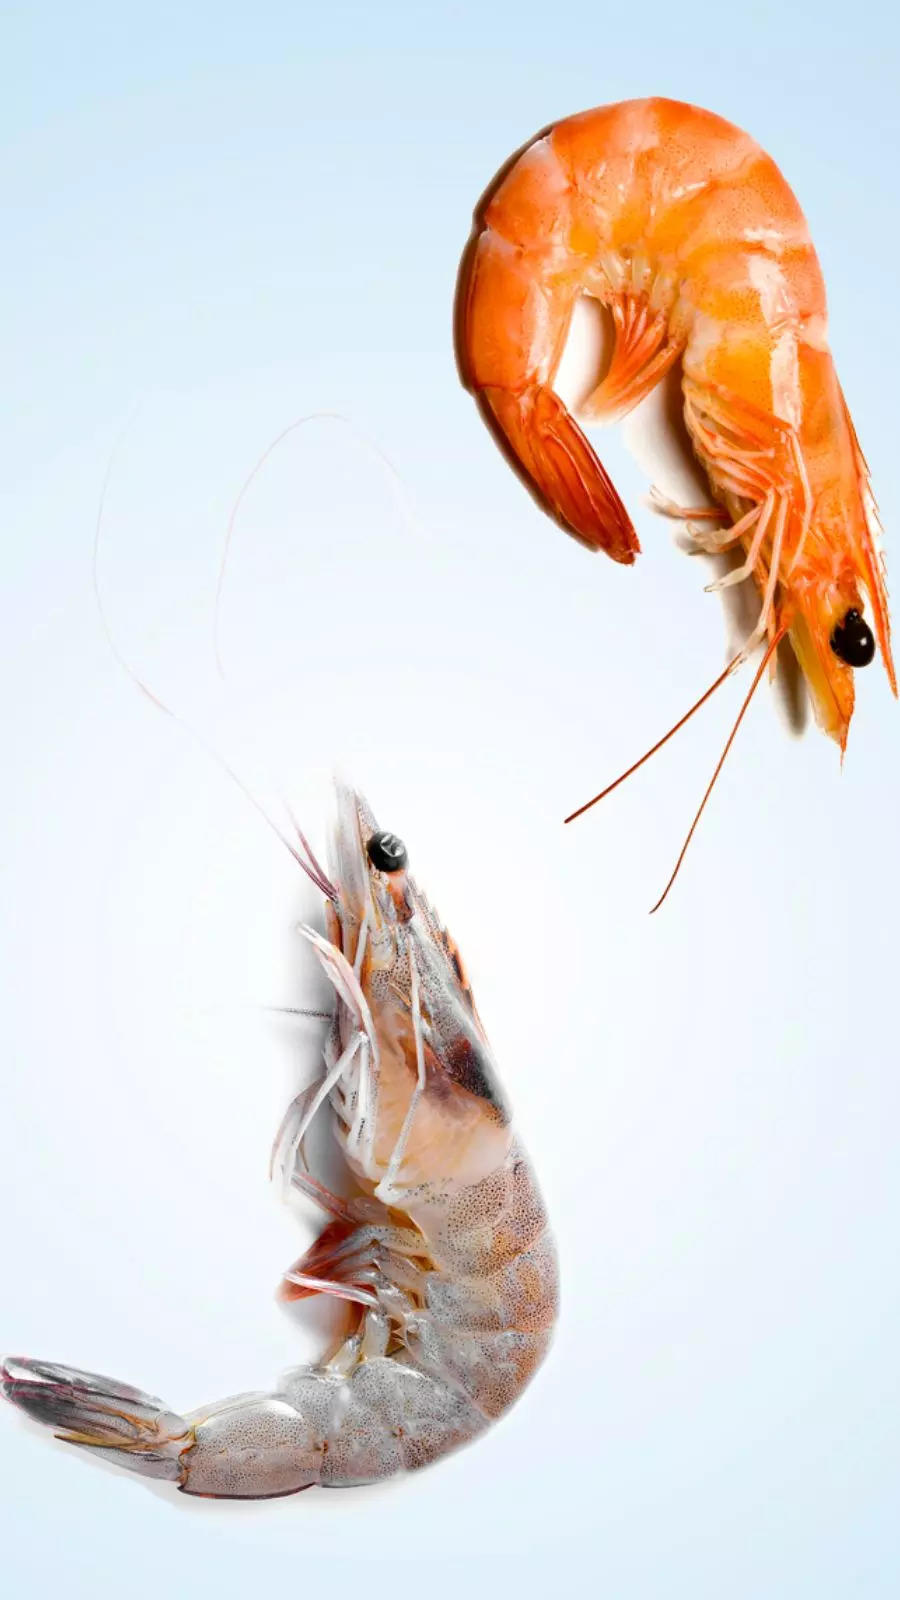 Shrimp Prawns Differences: 5 Key Differences Between Shrimp